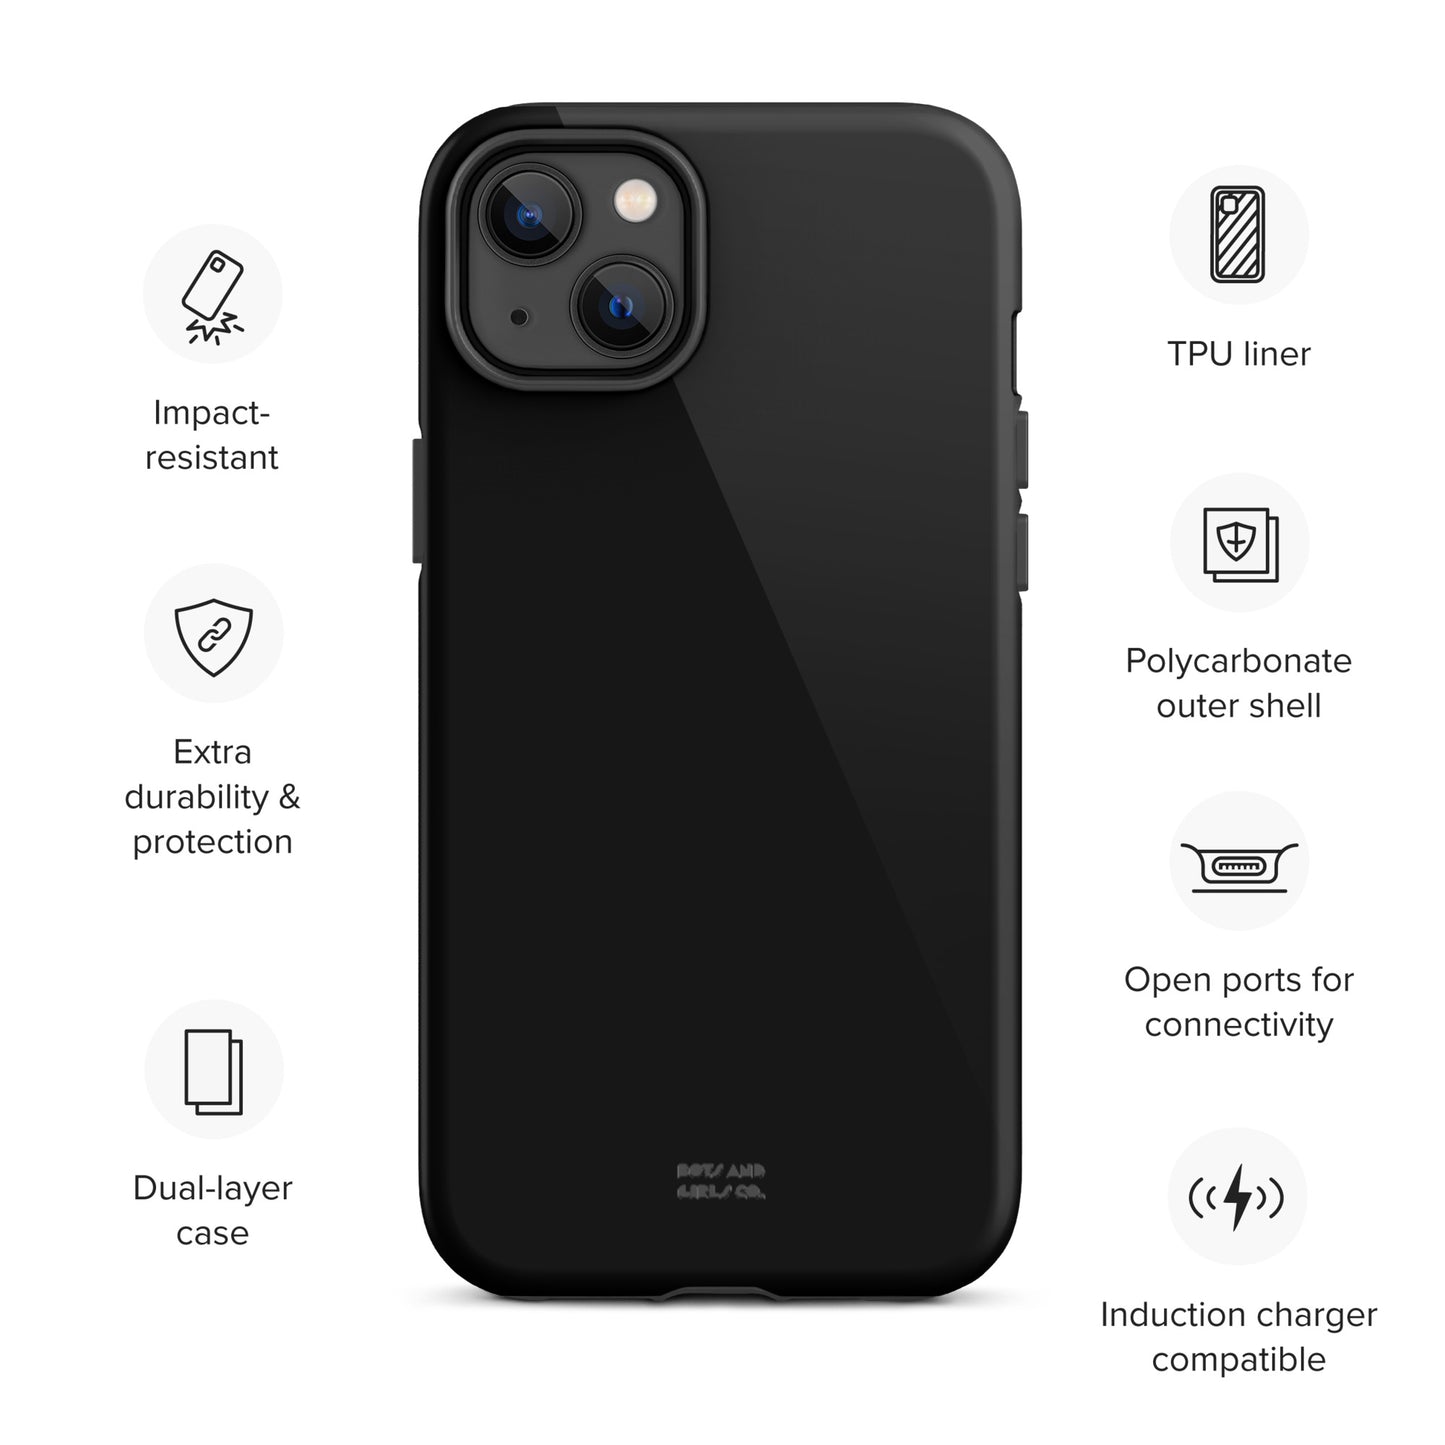 BLACK - Tough iPhone case